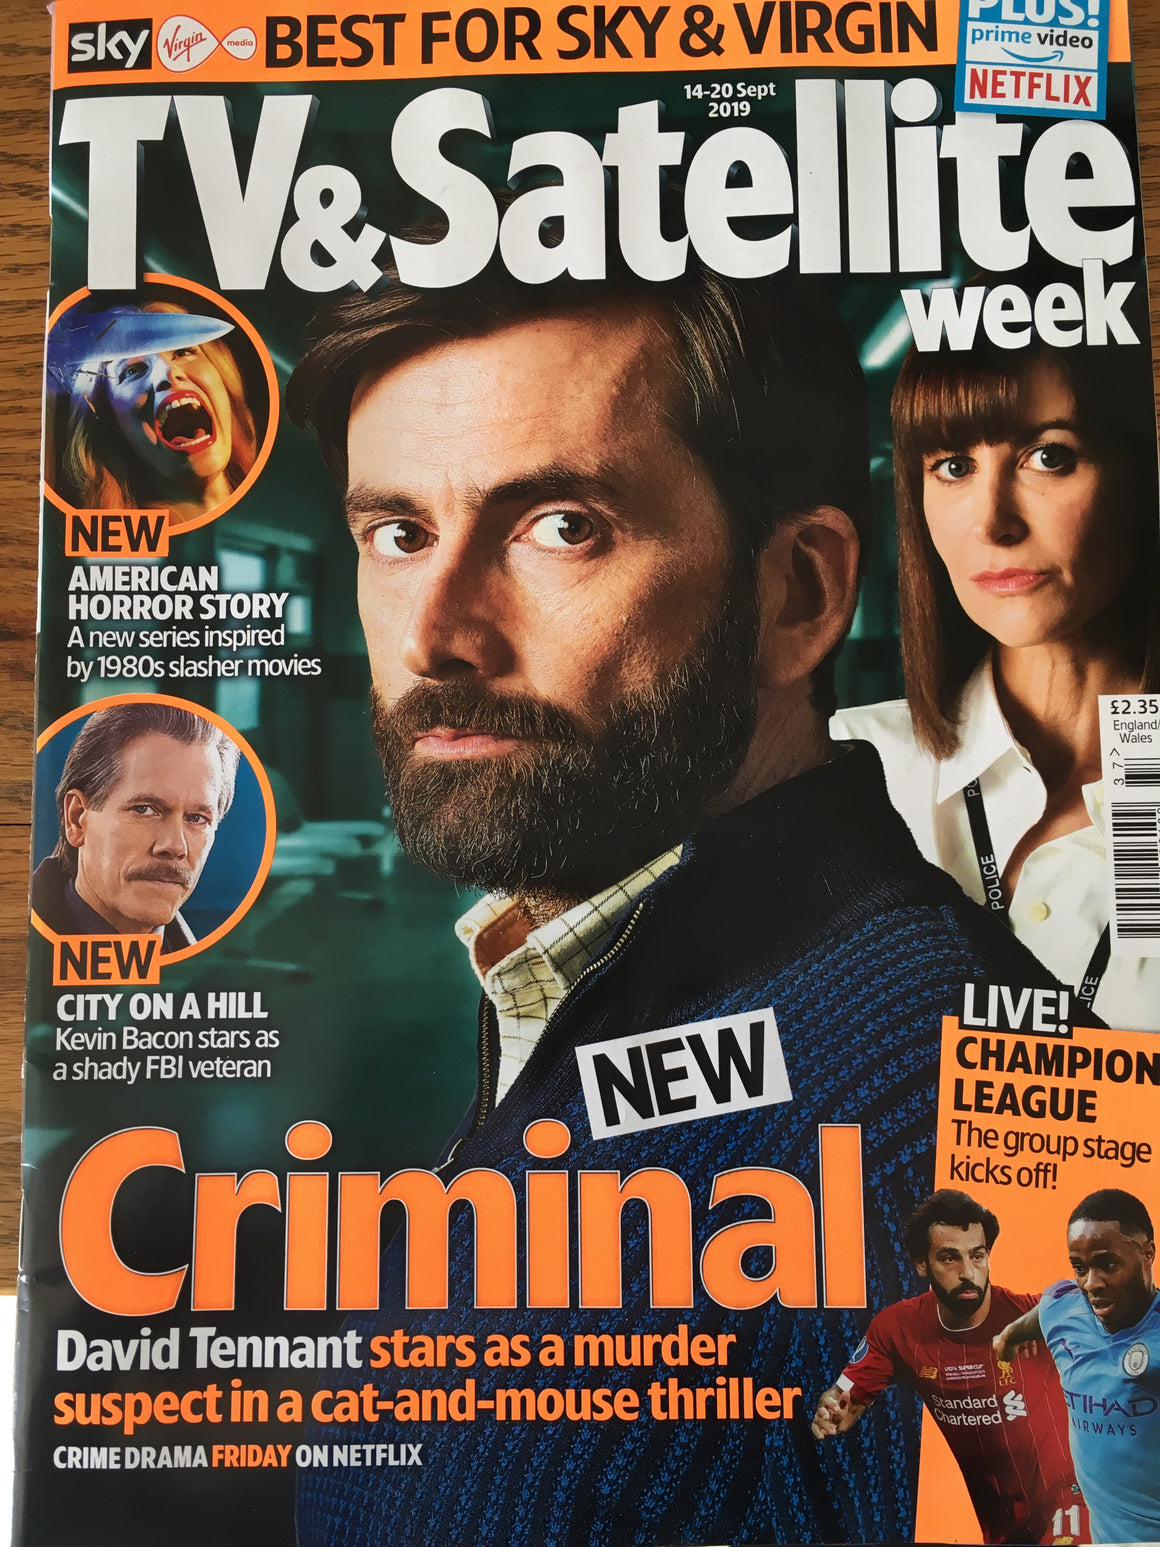 TV & Satellite Magazine 14 Sept 2019: DAVID TENNANT CRIMINAL COVER FEATURE